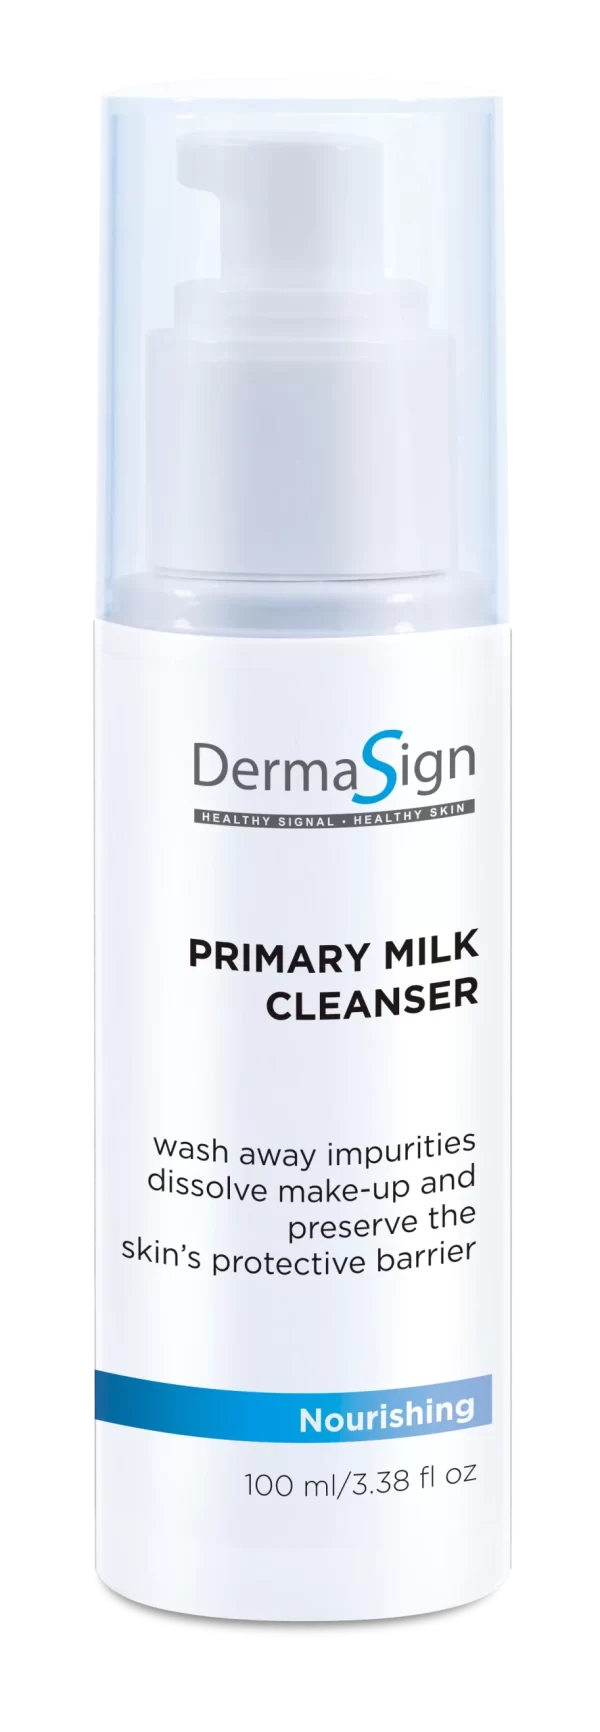 DermaSign 柔滑水潤潔面乳 Primary Milk Cleaner